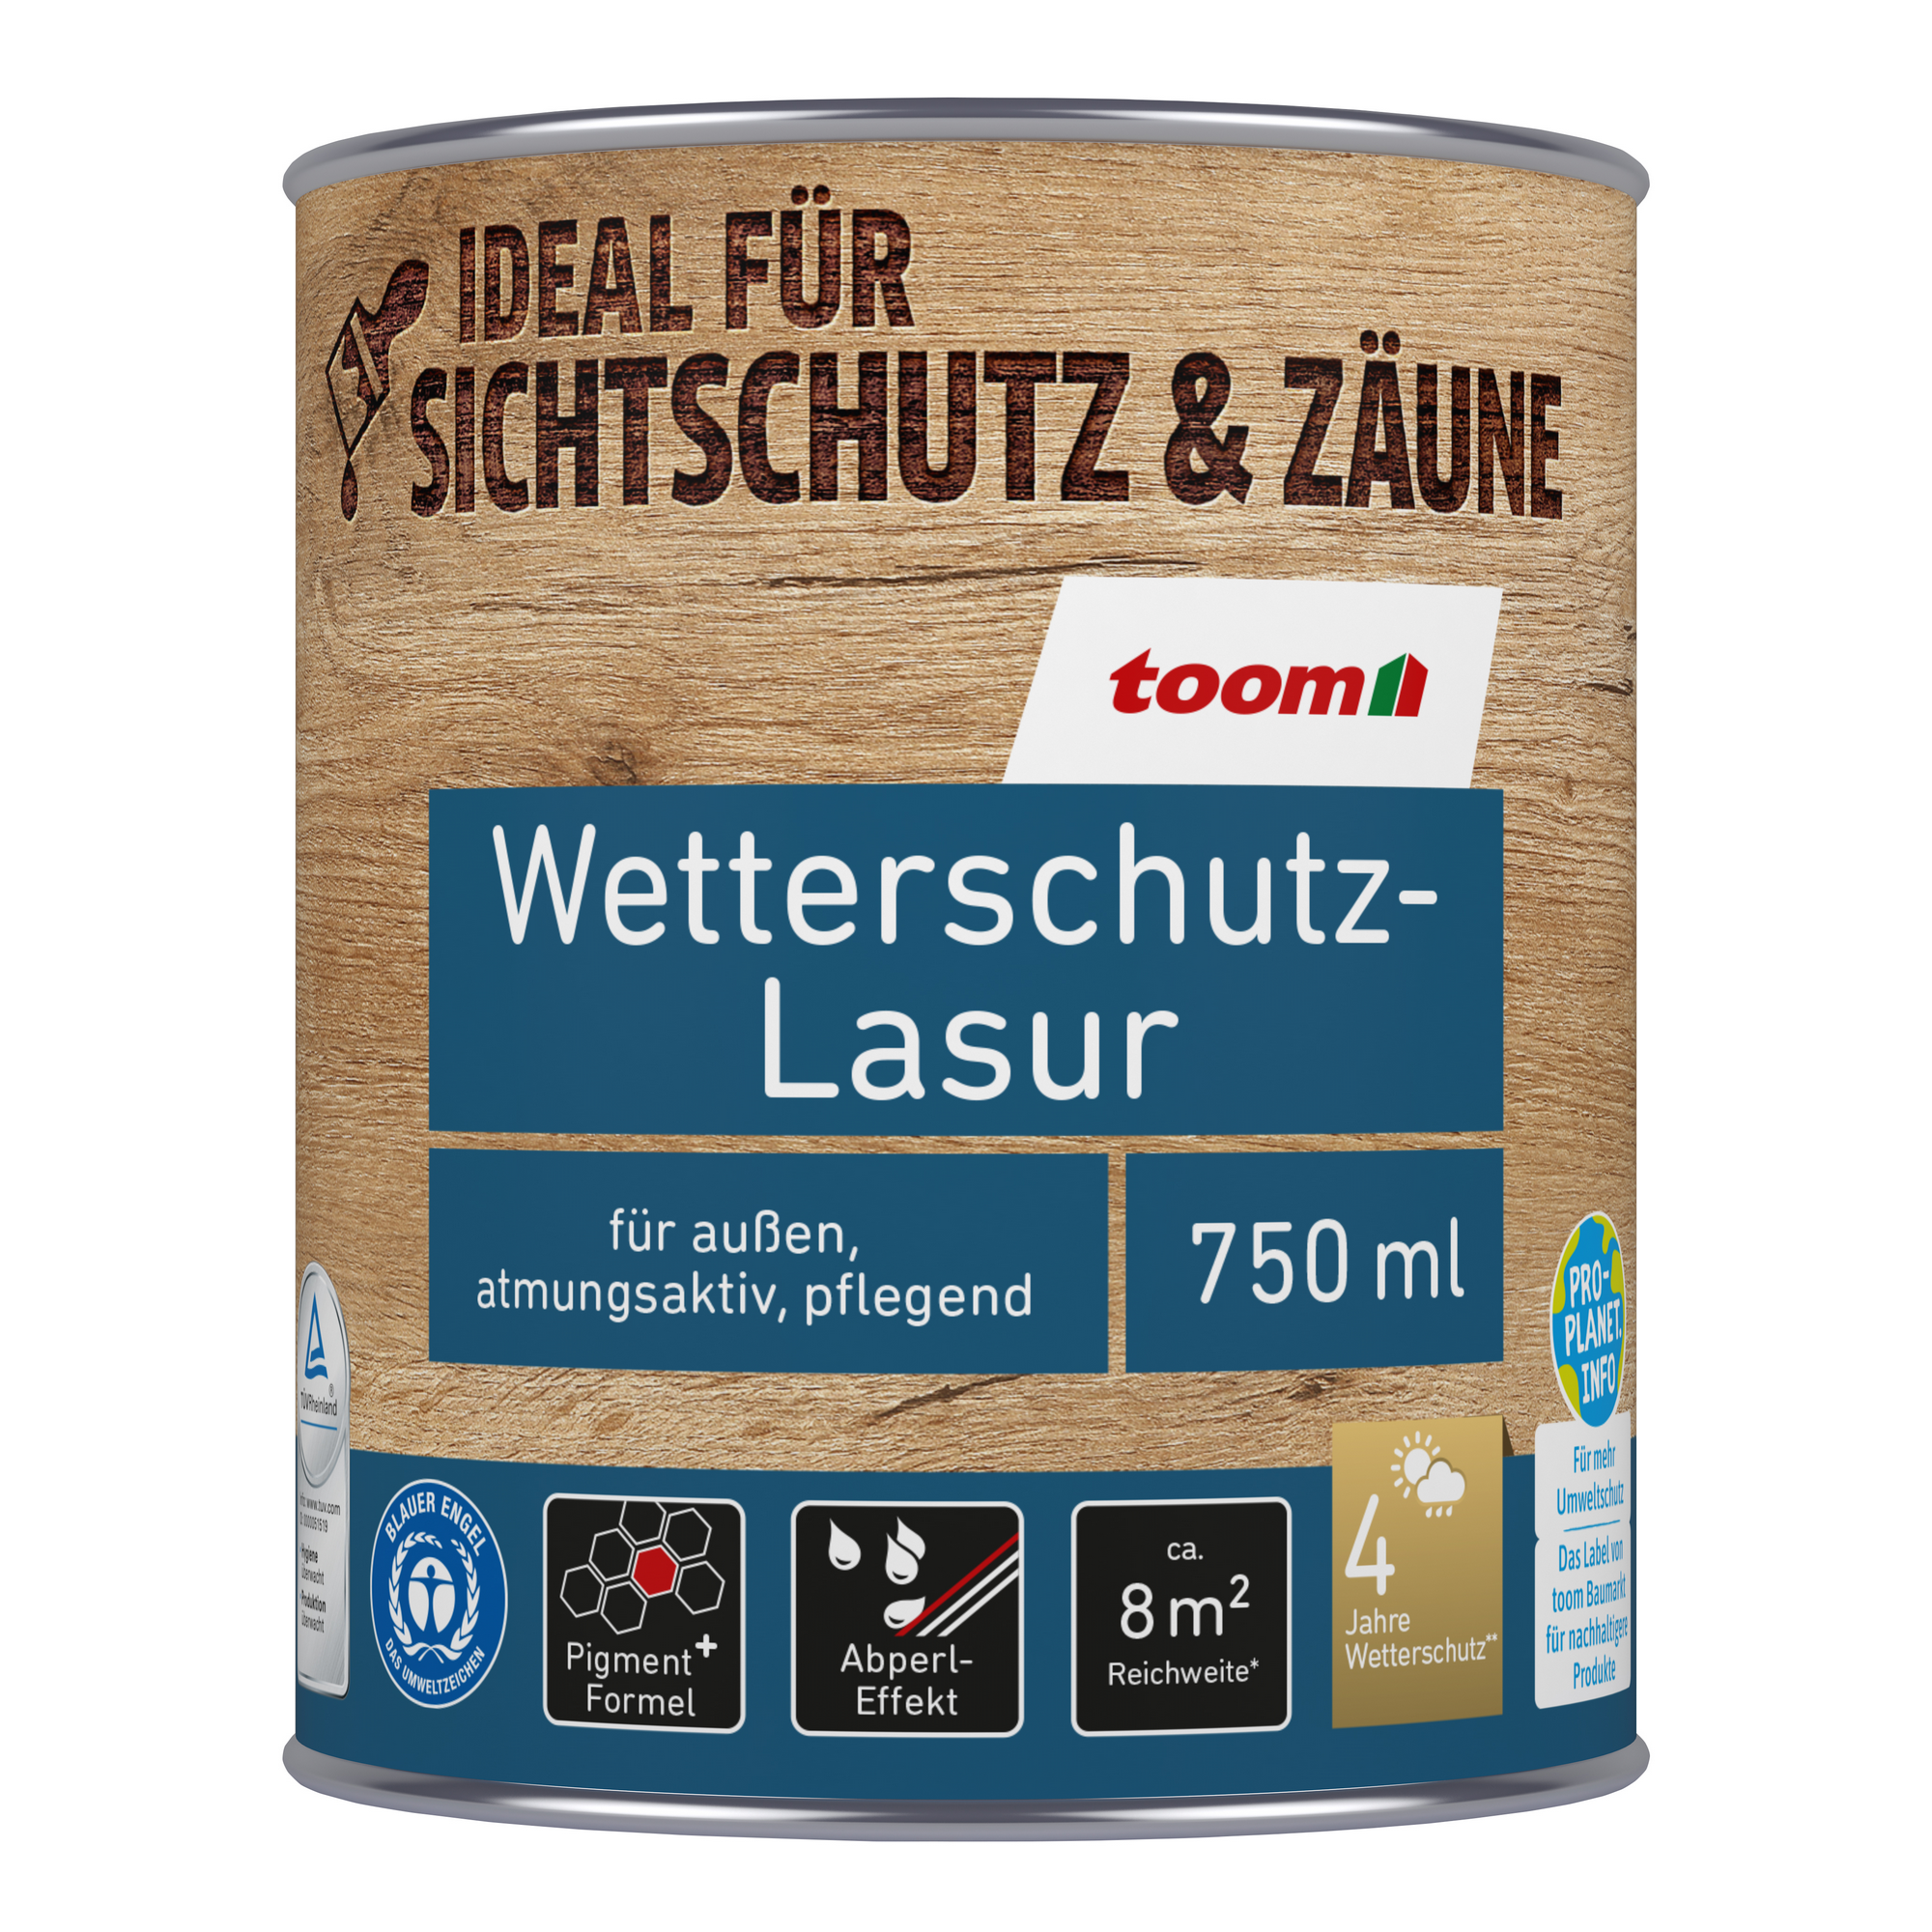 Wetterschutz-Lasur mahagonifarben 750 ml + product picture